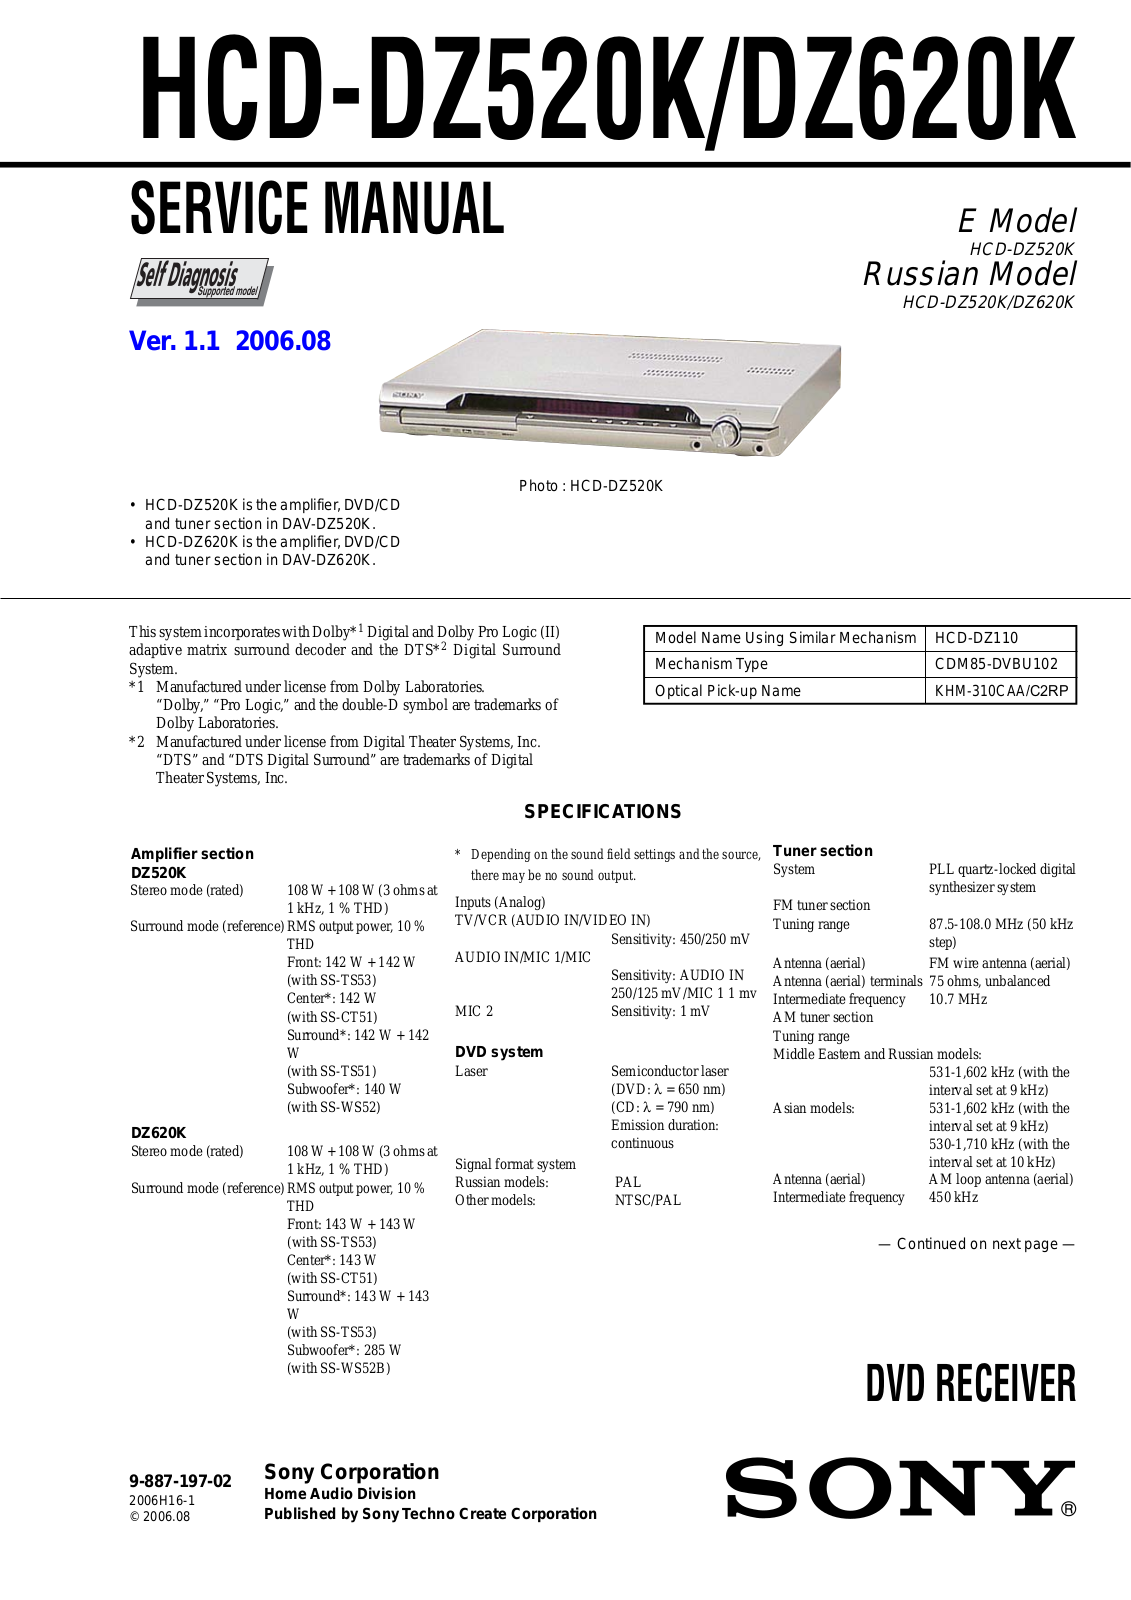 Sony HCD-DZ520K, HCD-DZ620K Service Manual